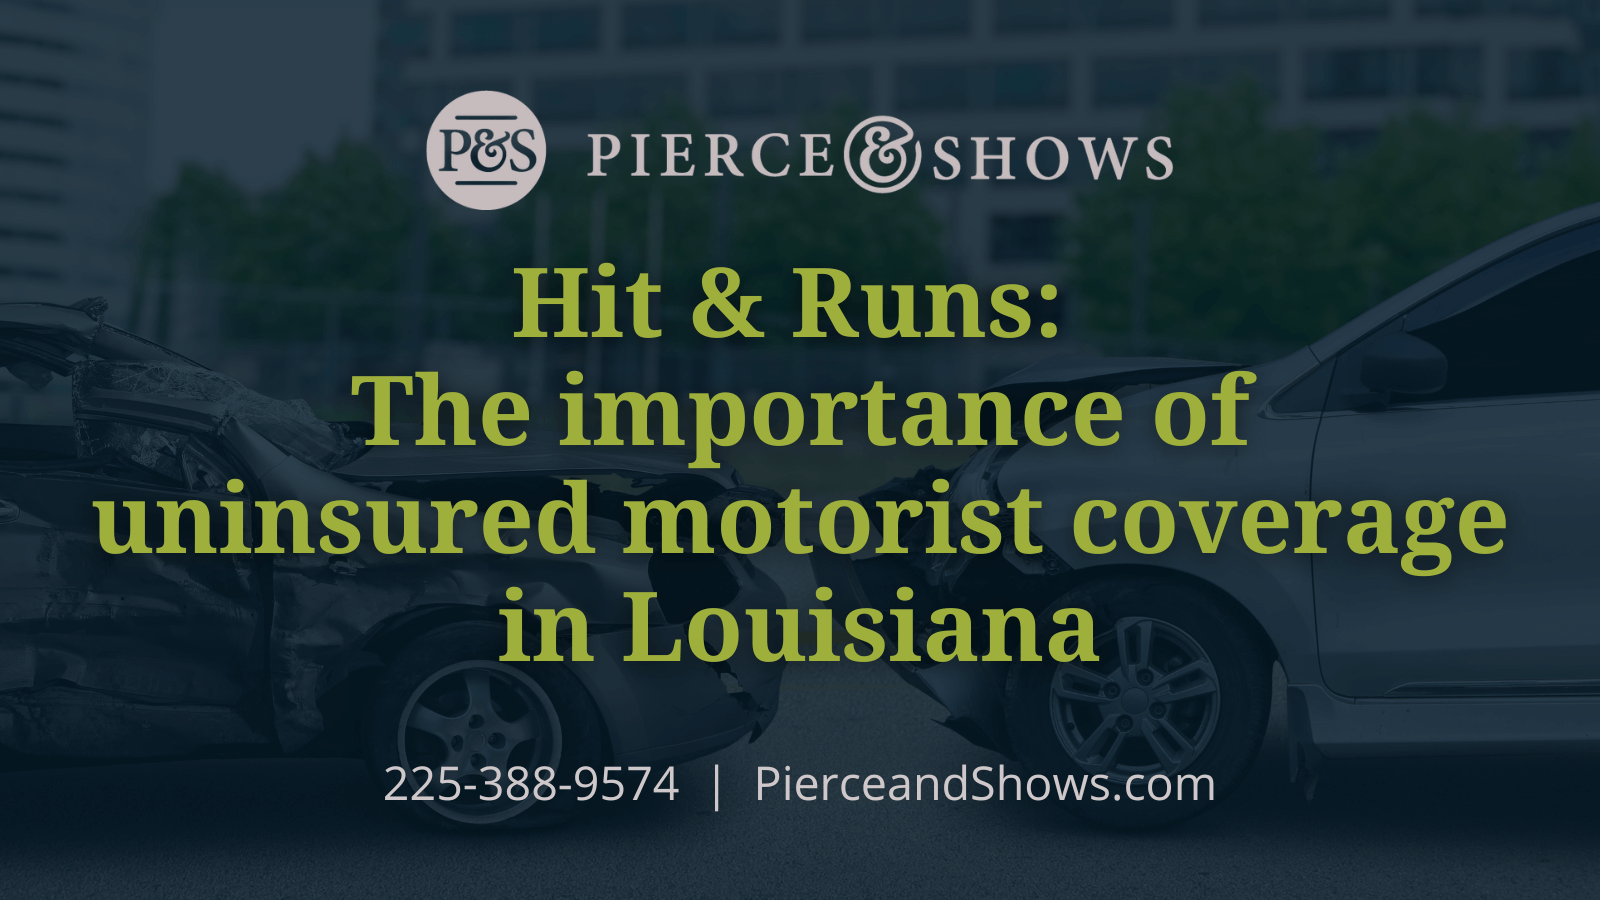 Hit & Runs: The importance of uninsured motorist coverage in Louisiana - Baton Rouge Louisiana injury attorney Pierce & Shows